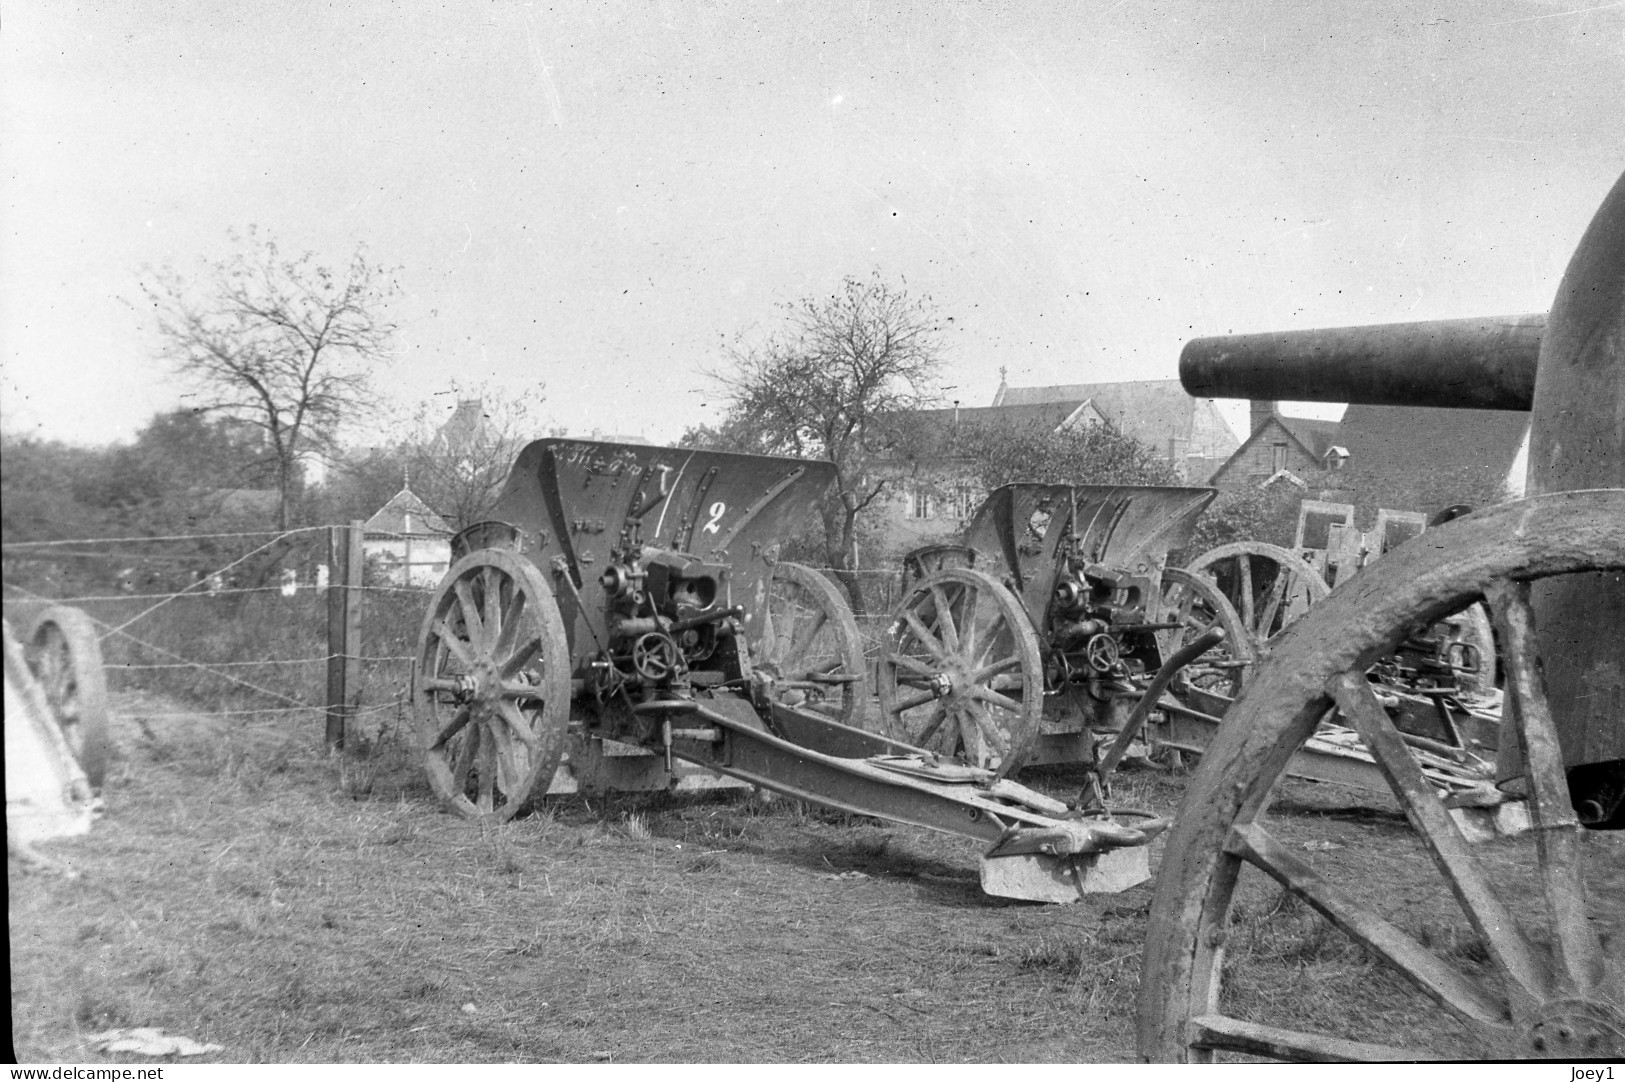 Photo Grande Guerre Format 13/18 Tirage Contemporain Argentique ,artillerie. - Krieg, Militär